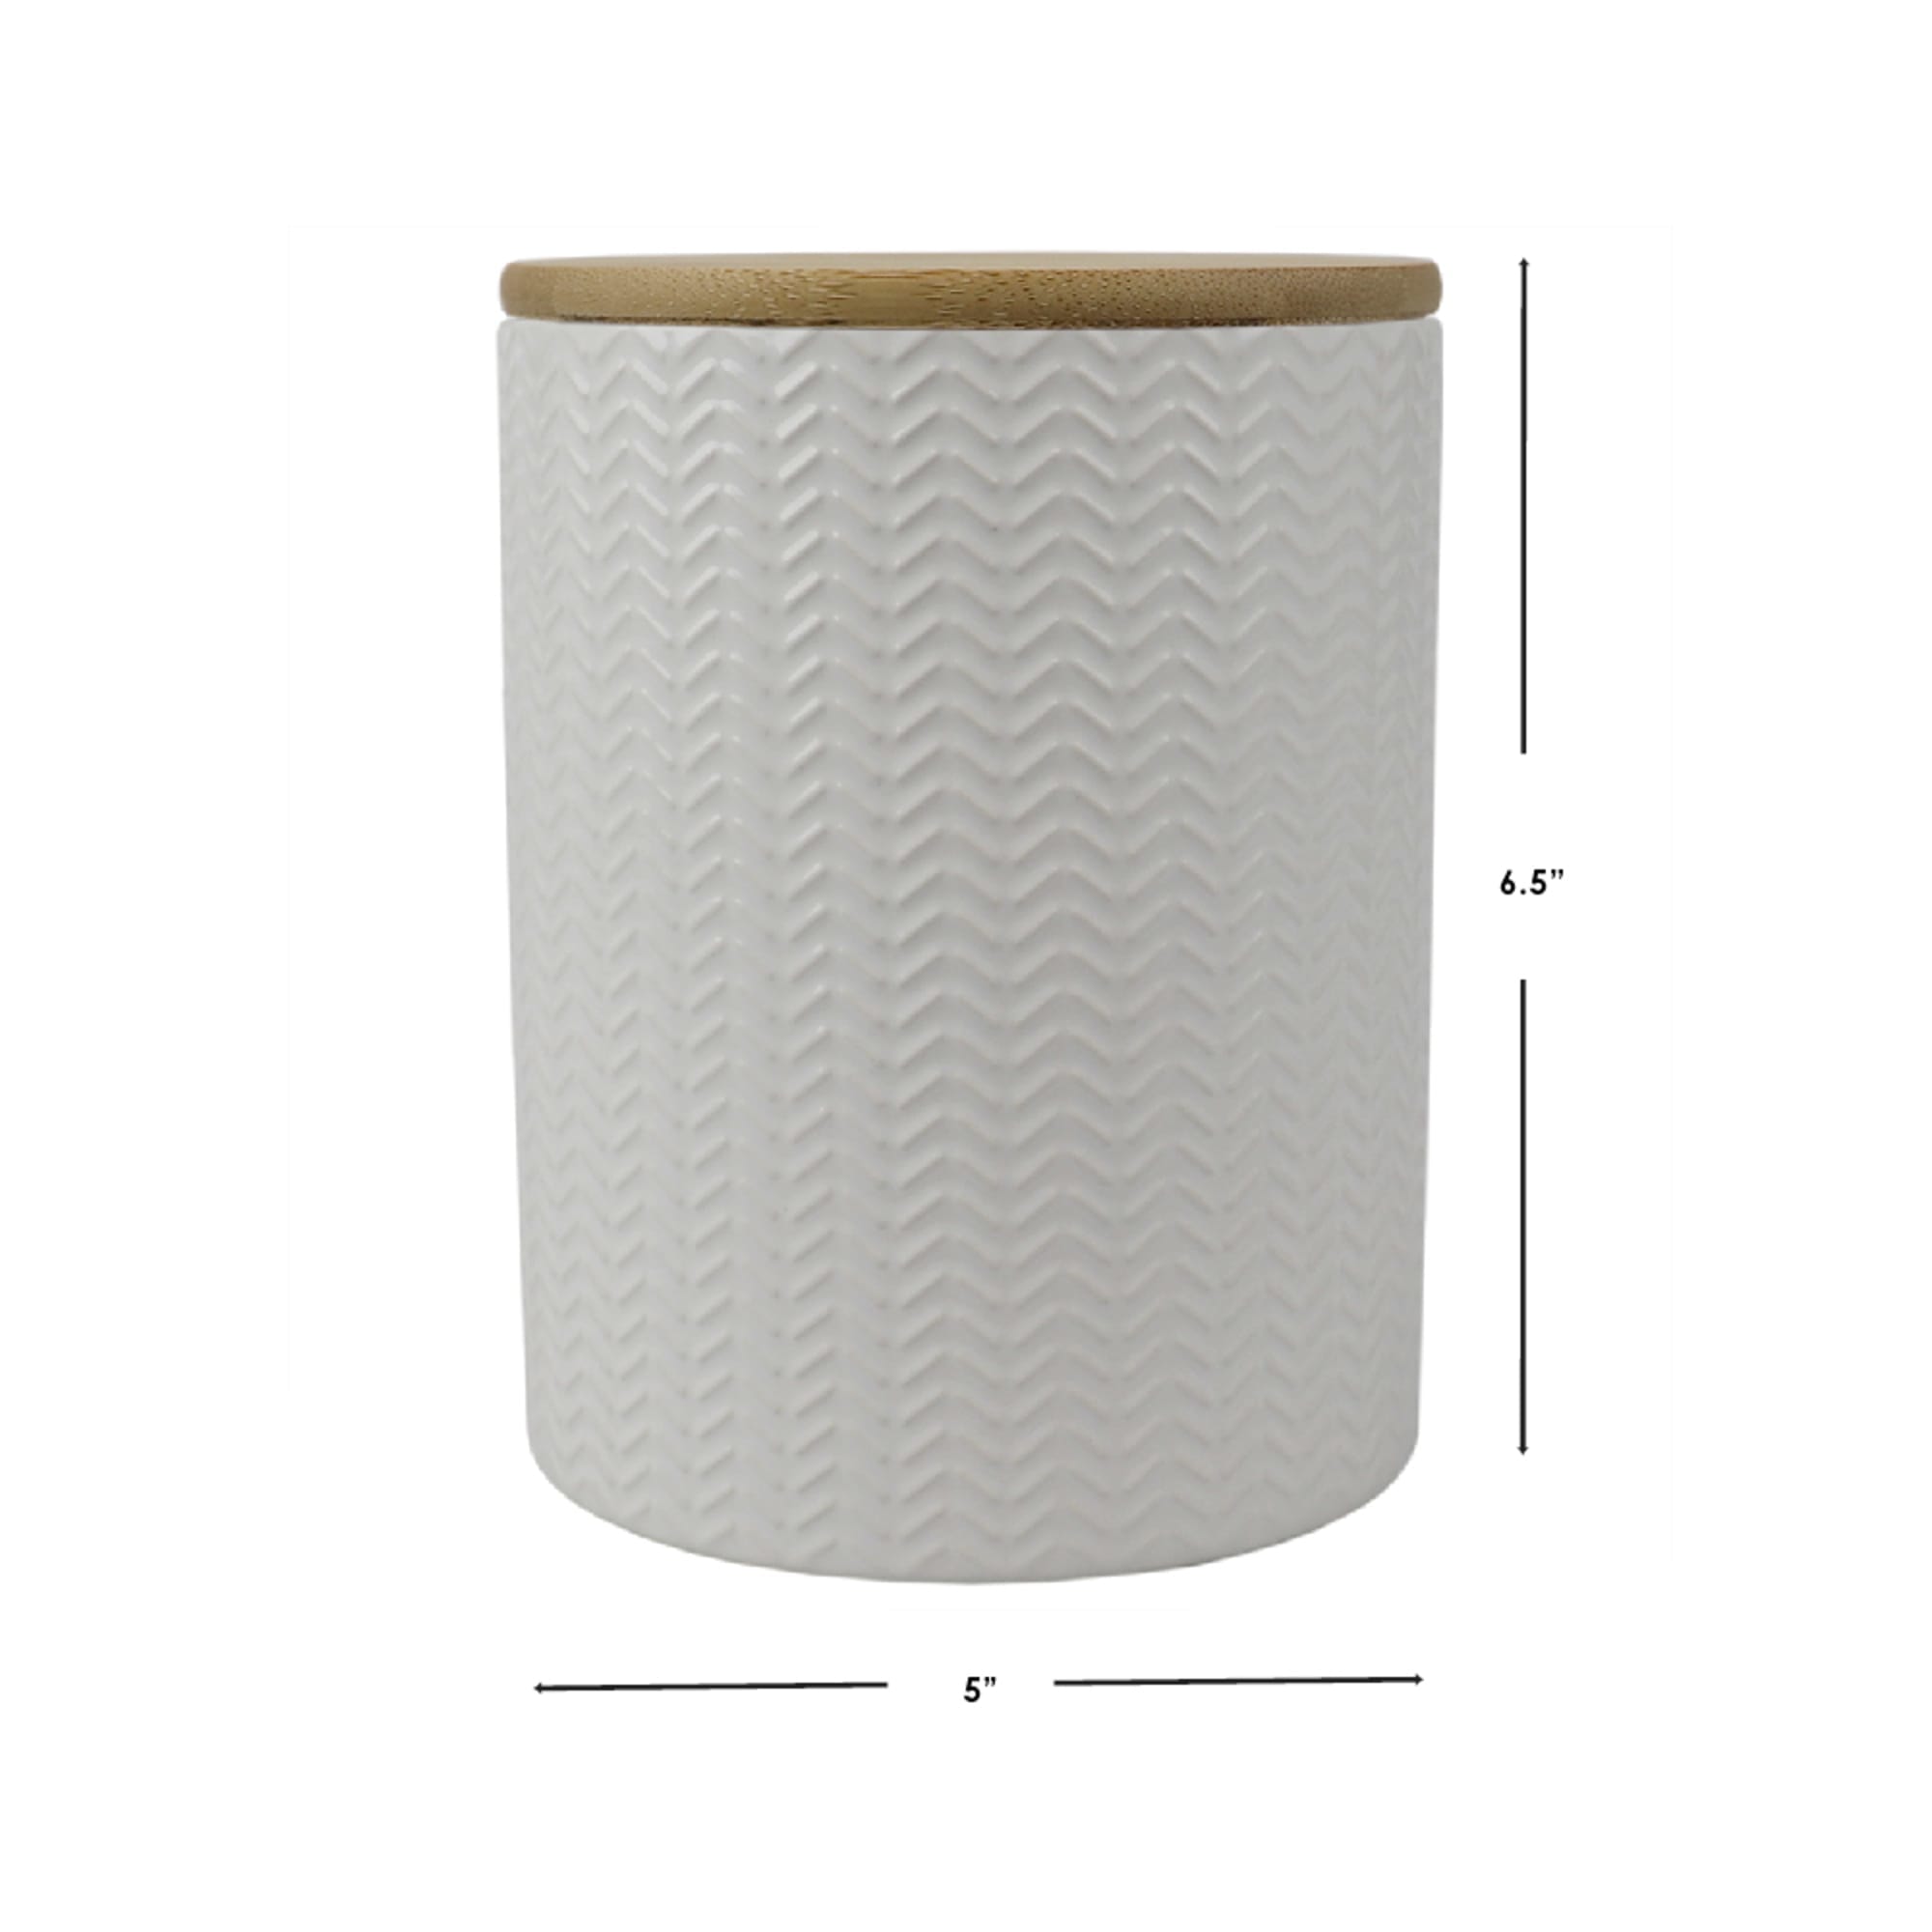 Home Basics Wave Medium Ceramic Canister, White $6.00 EACH, CASE PACK OF 12